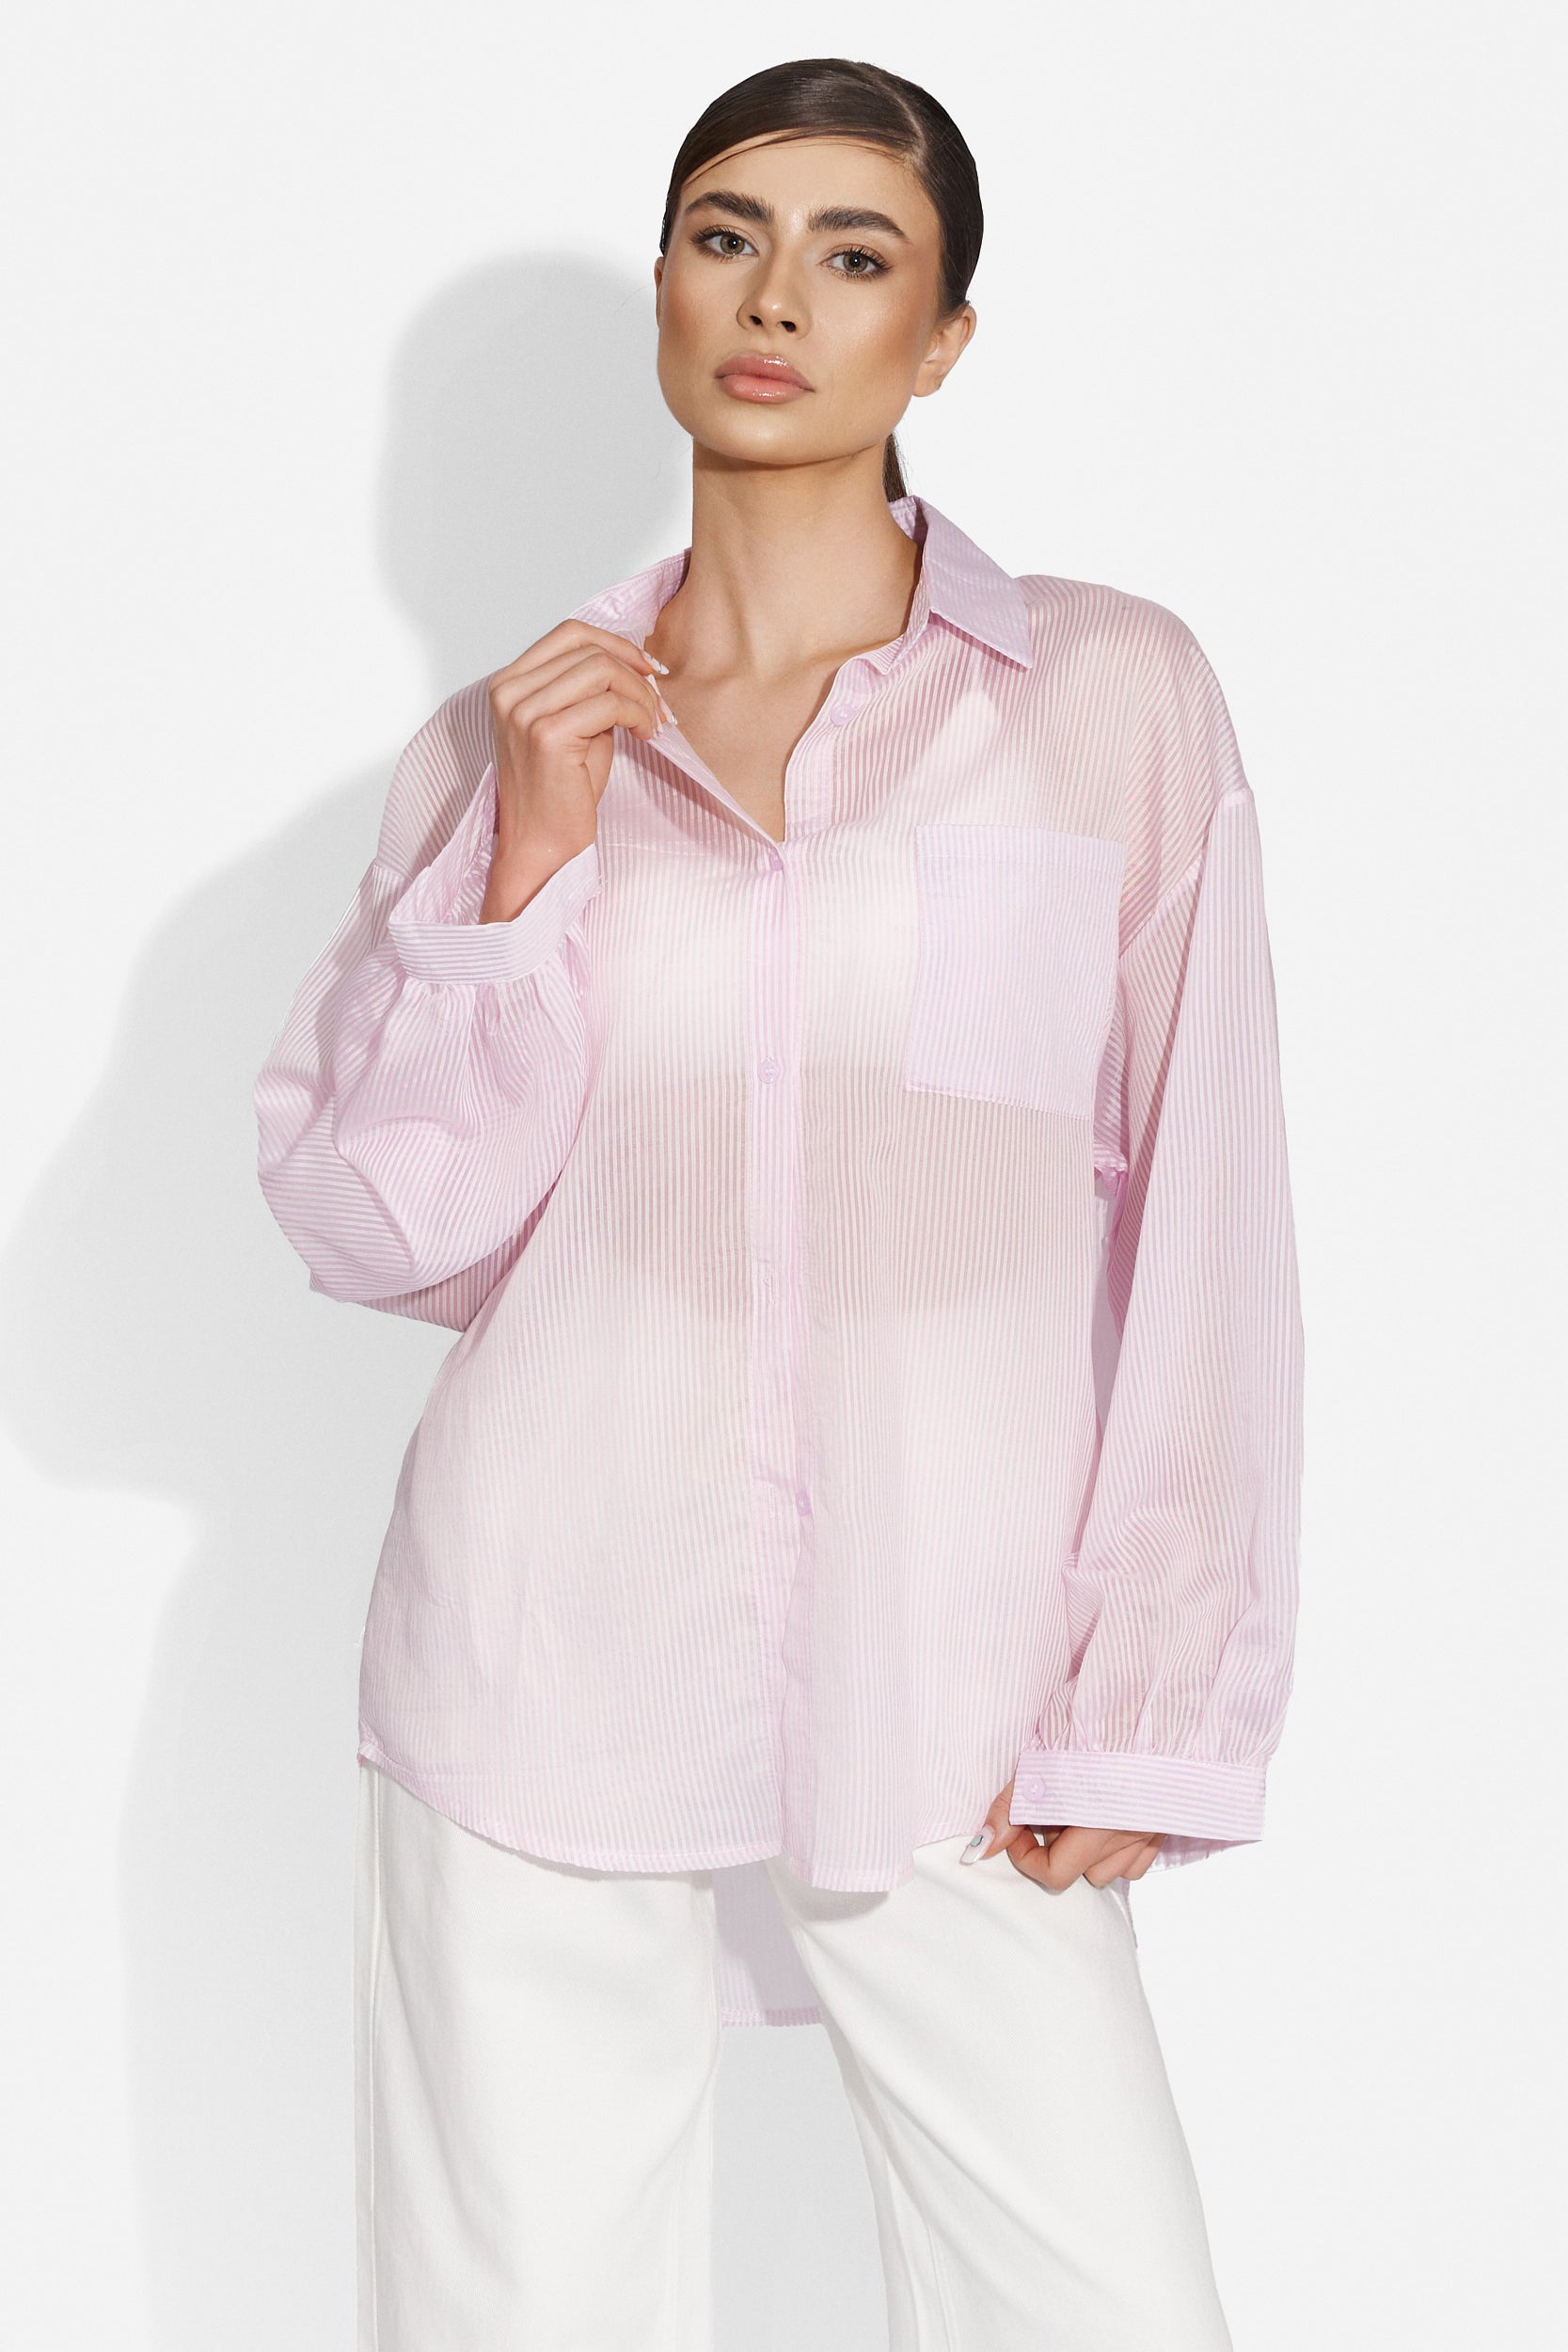 Ladies elegant pink shirt Valety Bogas